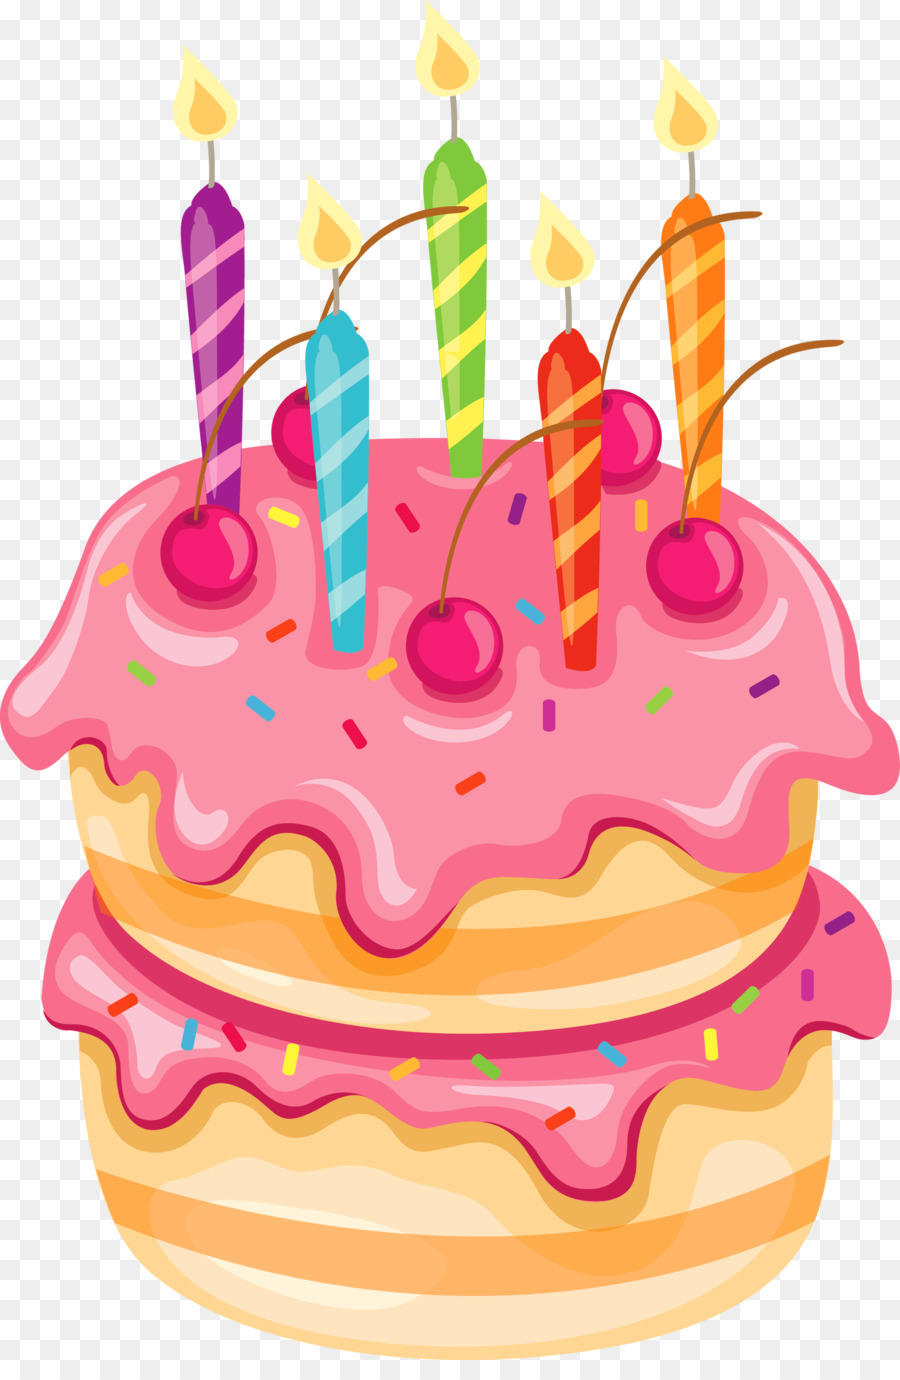 Birthday cake Clip art - cake png download - 2050*3098 - Free Transparent Birthday Cake png Download.